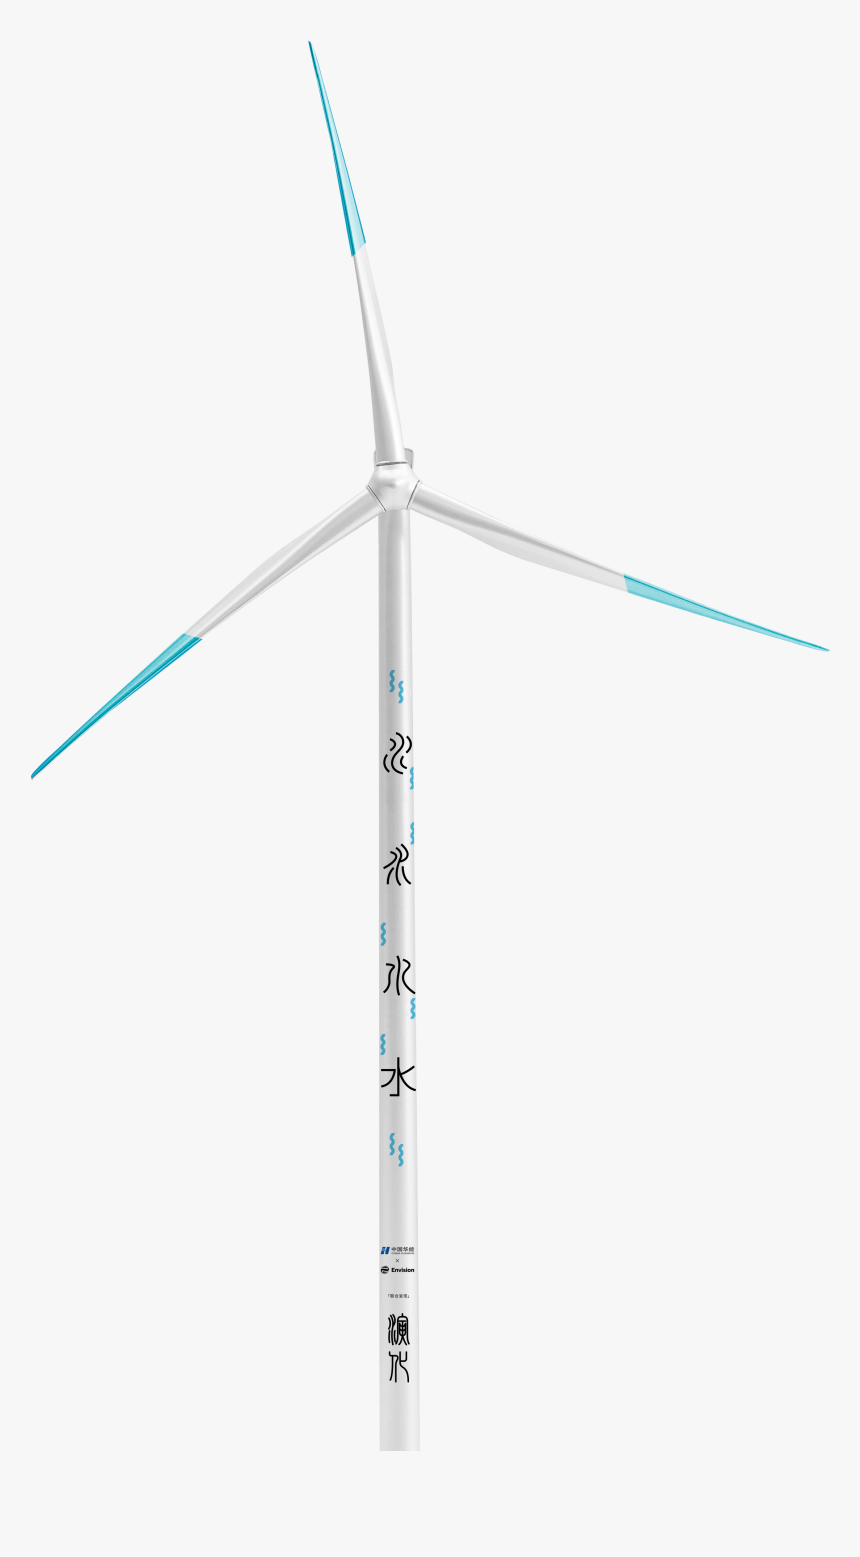 Wind Turbine, HD Png Download, Free Download